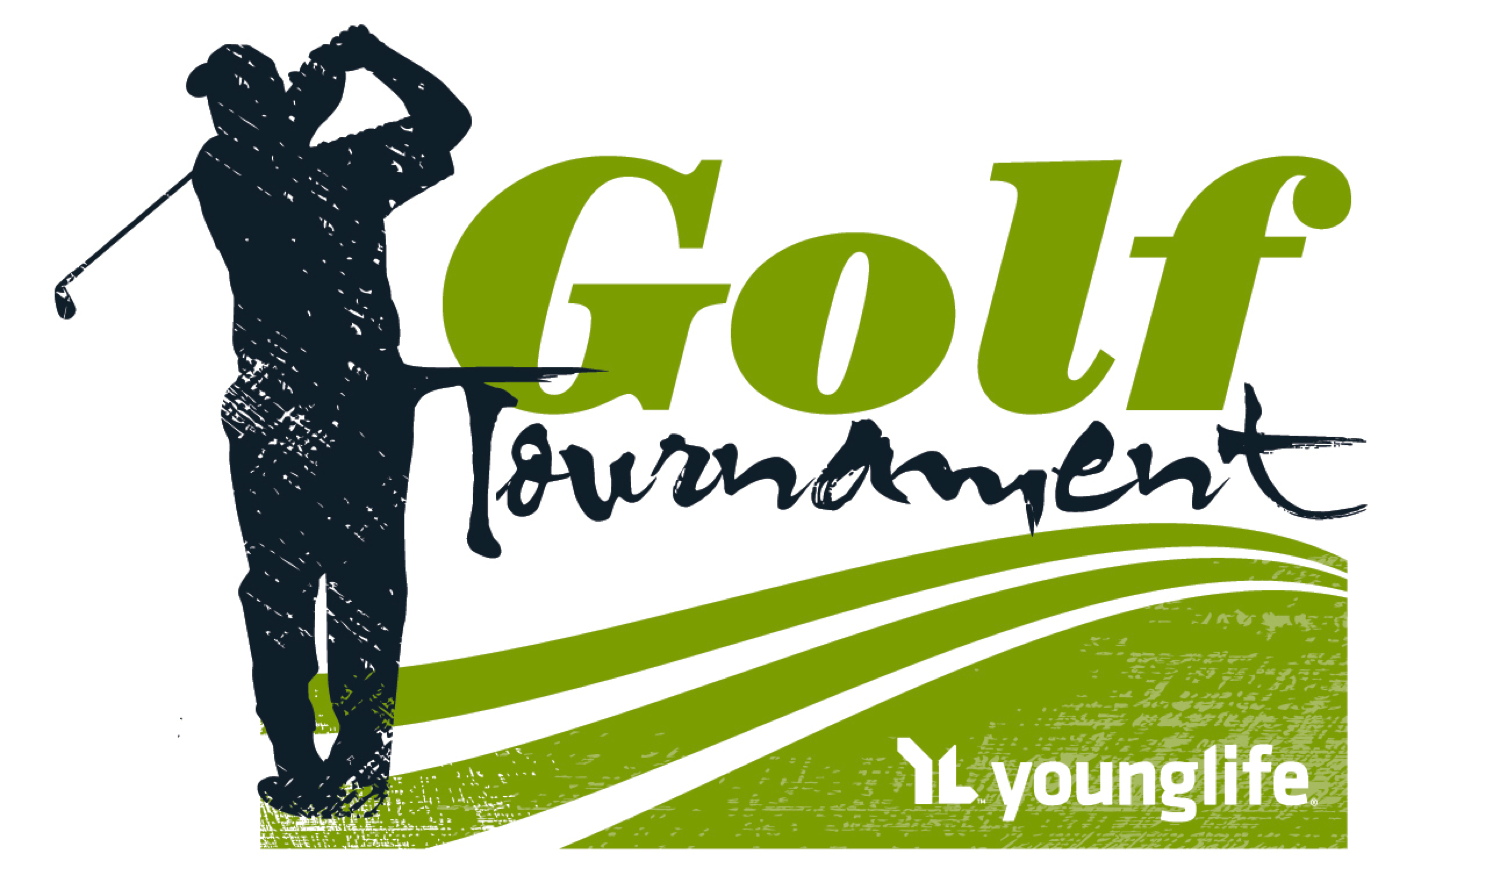 2014 Young Life Golf Tournament